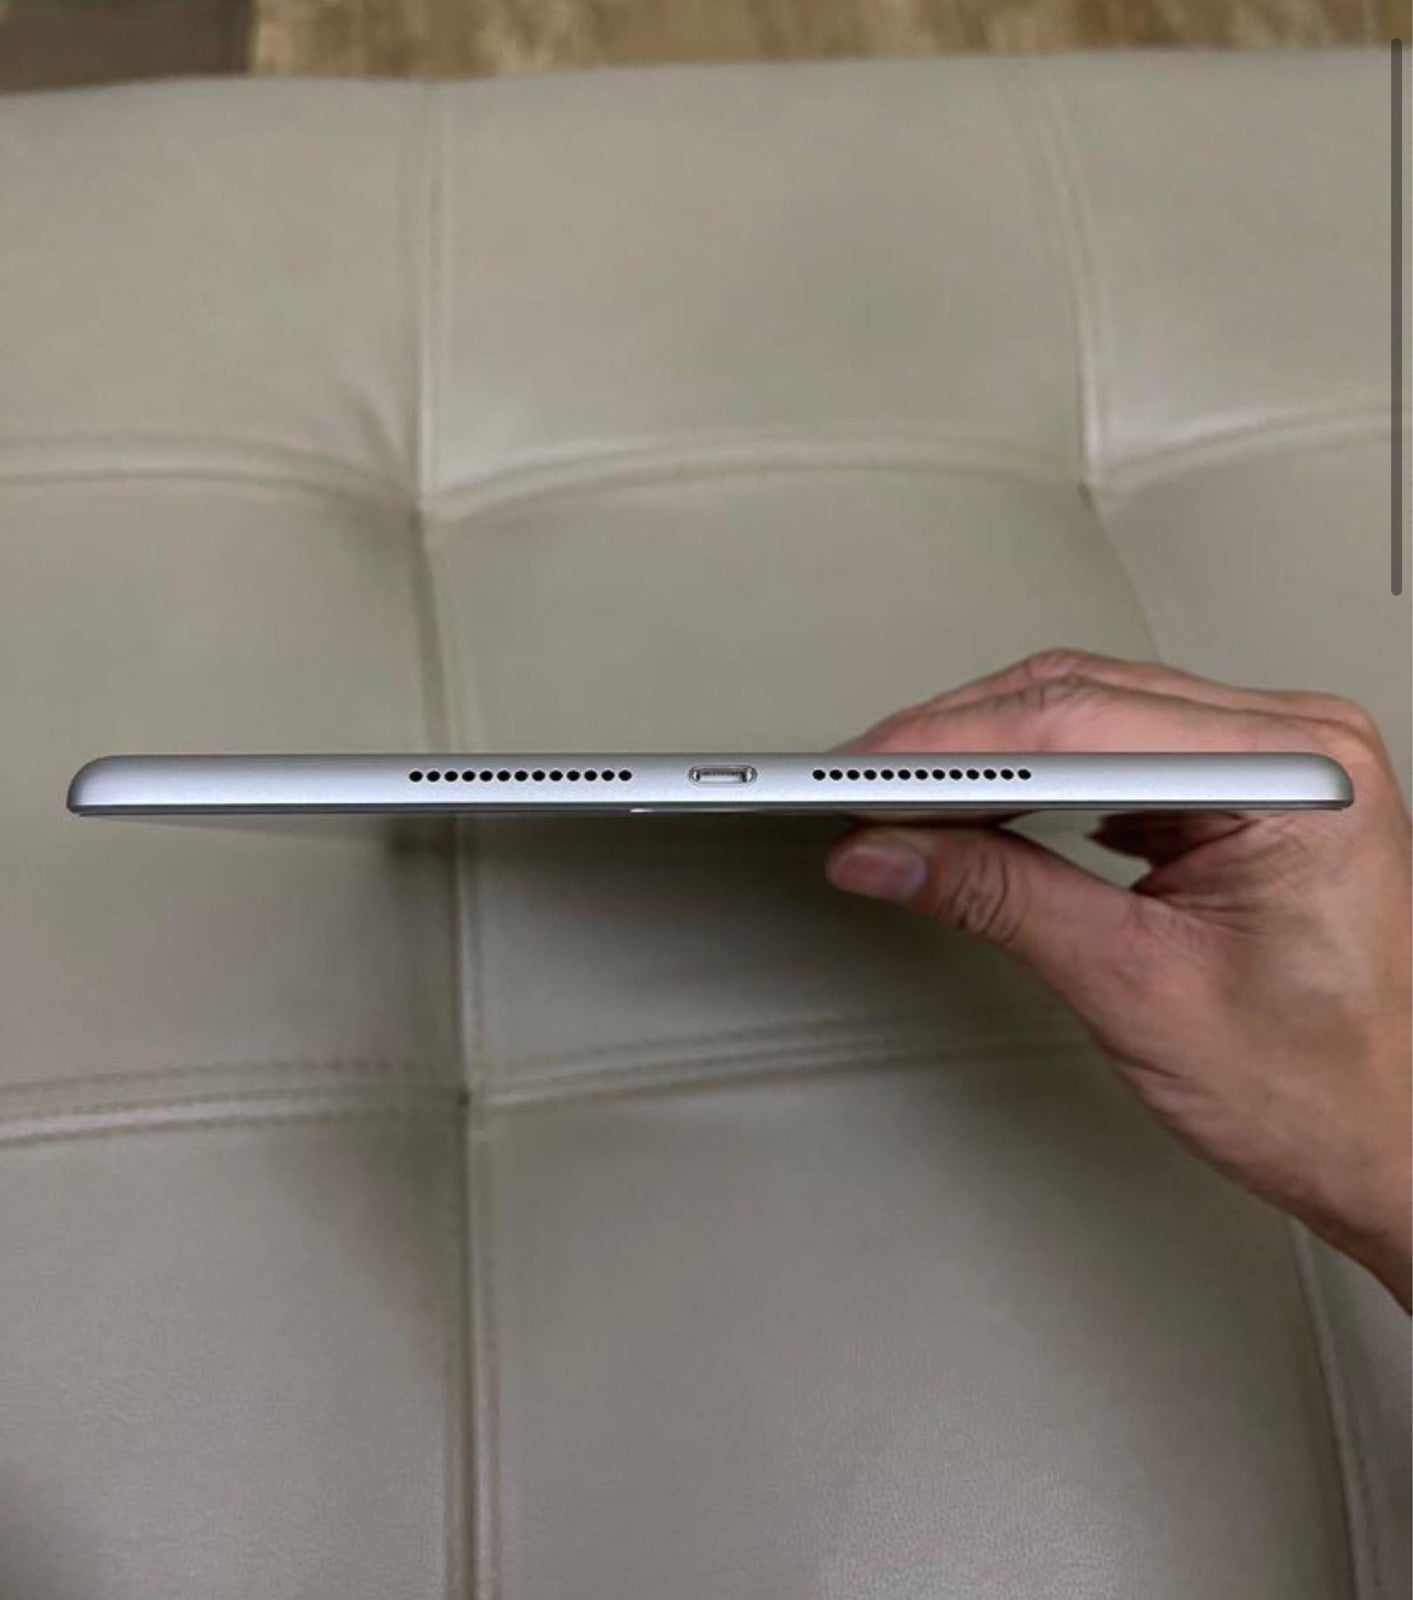 iPad 8, 128 GB, hvid